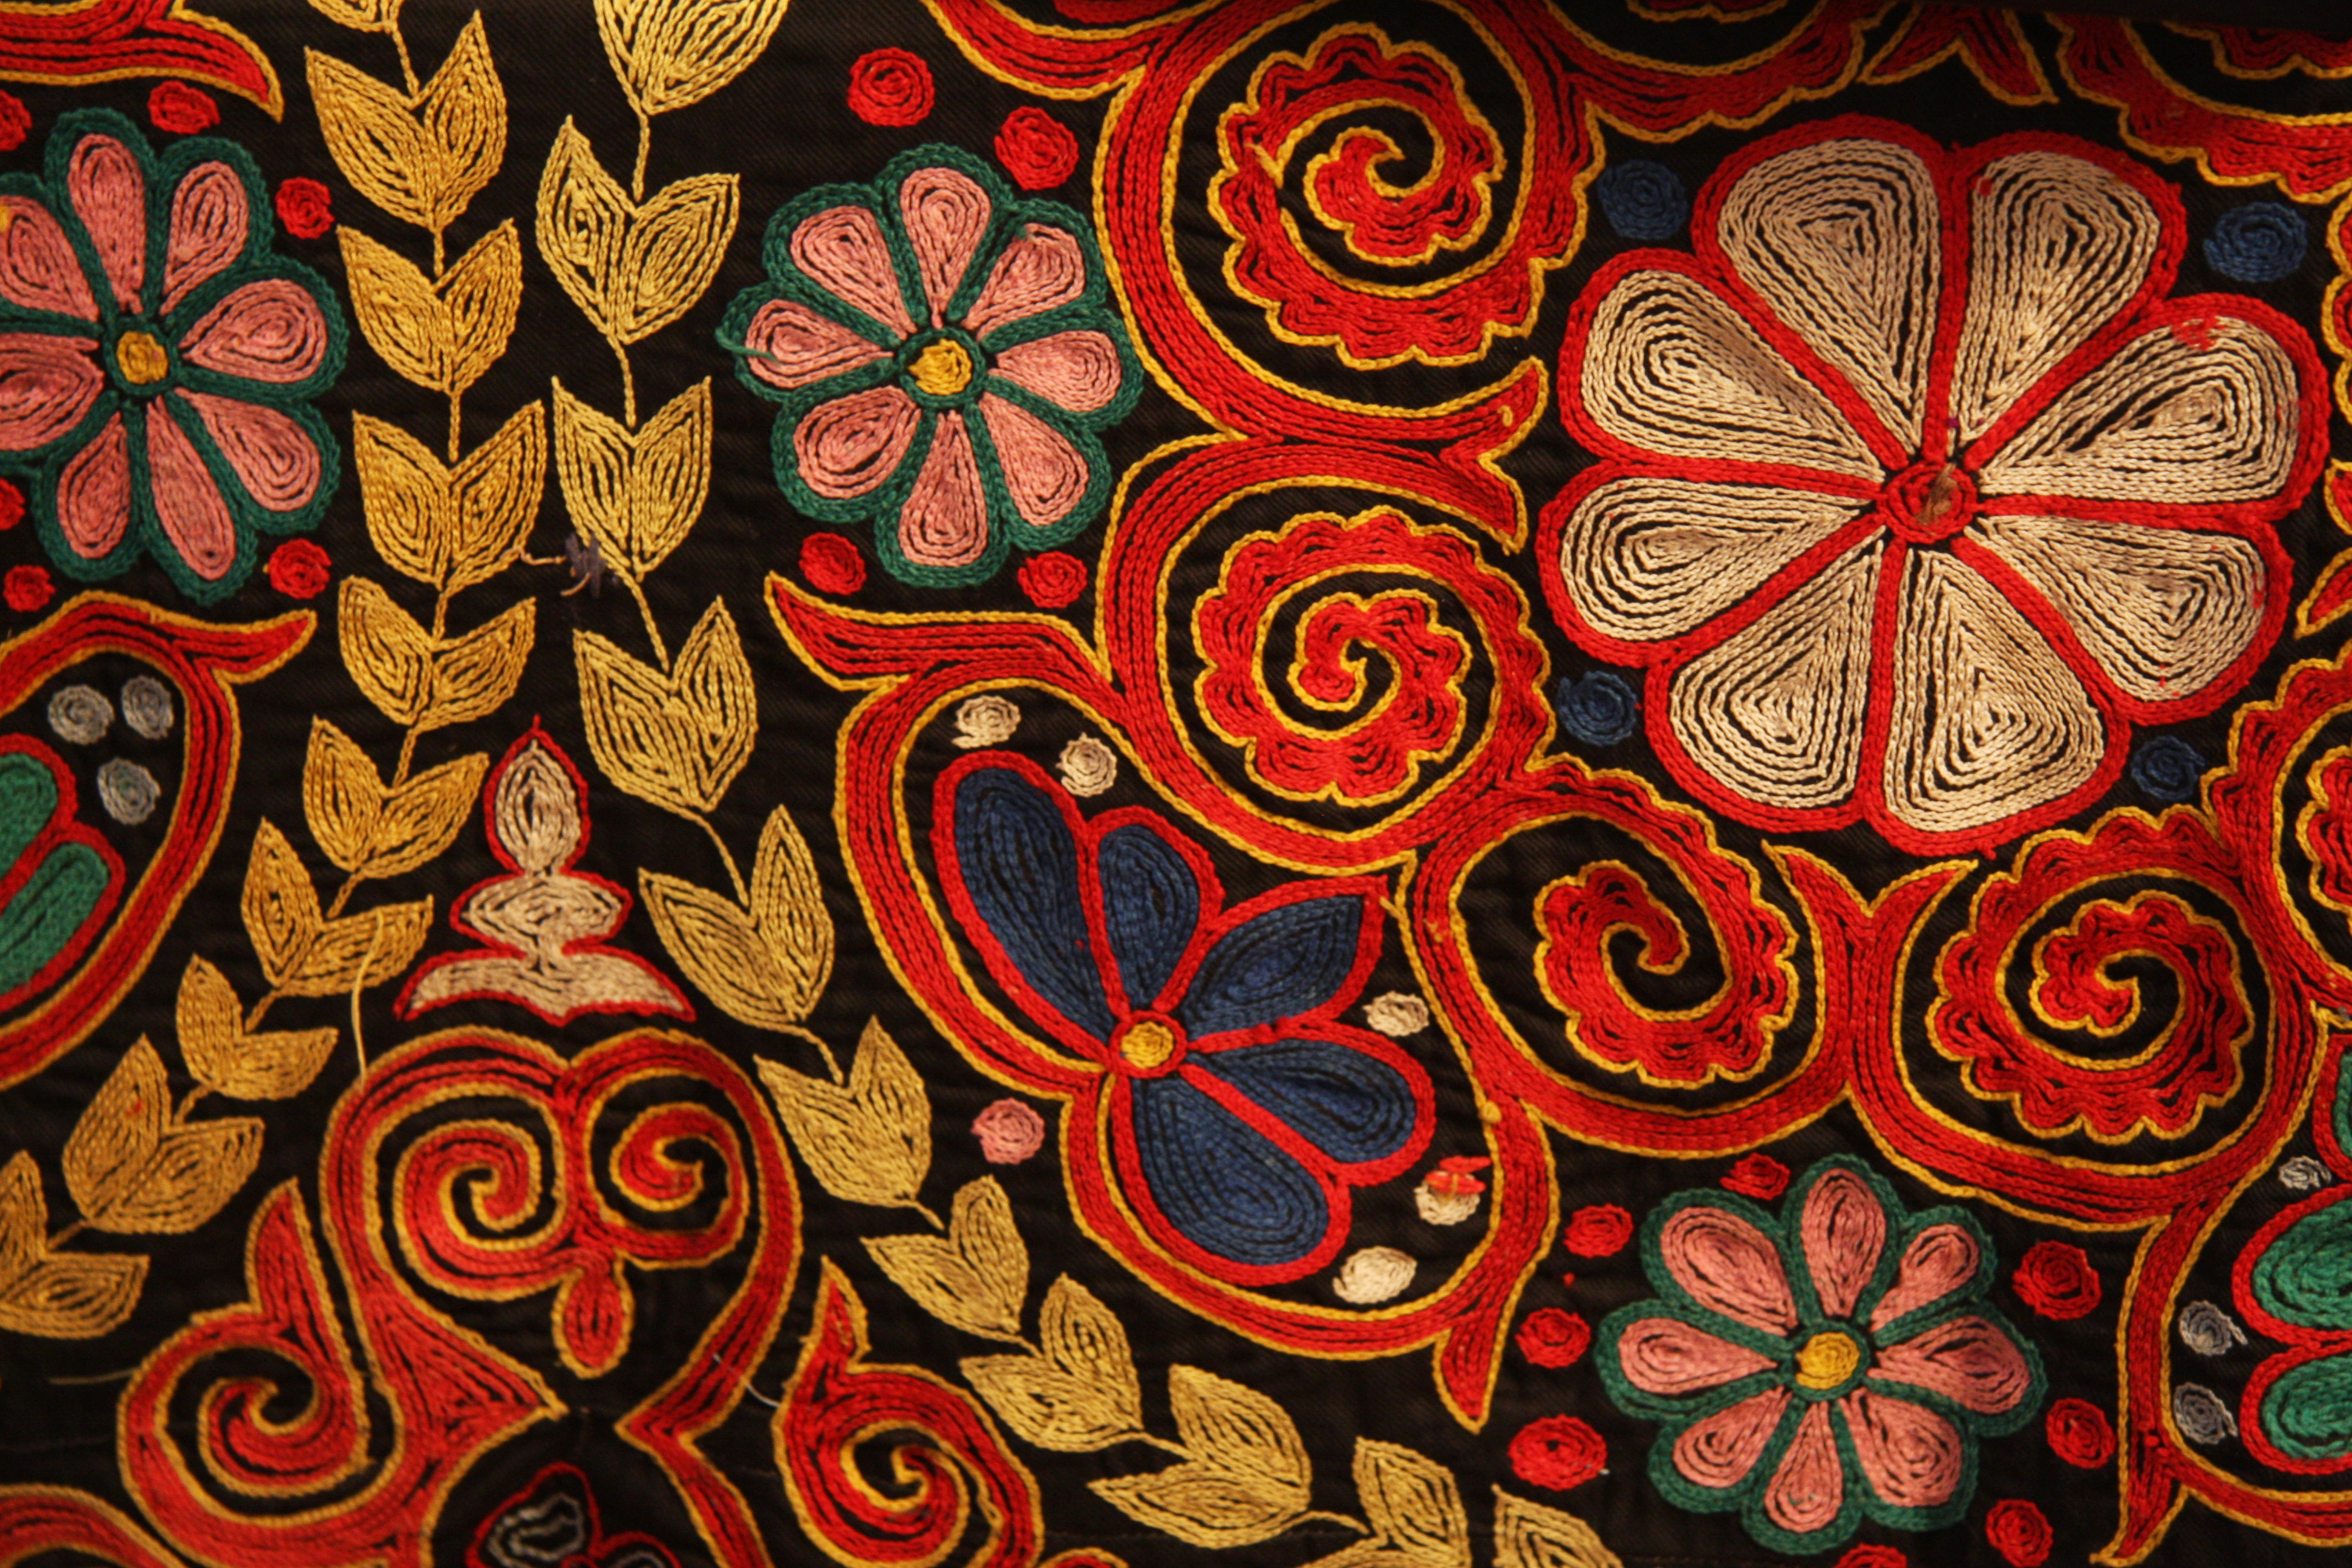 Ragam hias pada kain dengan menggunakan benang warna-warni yang dibuat dengan teknik timbul disebut